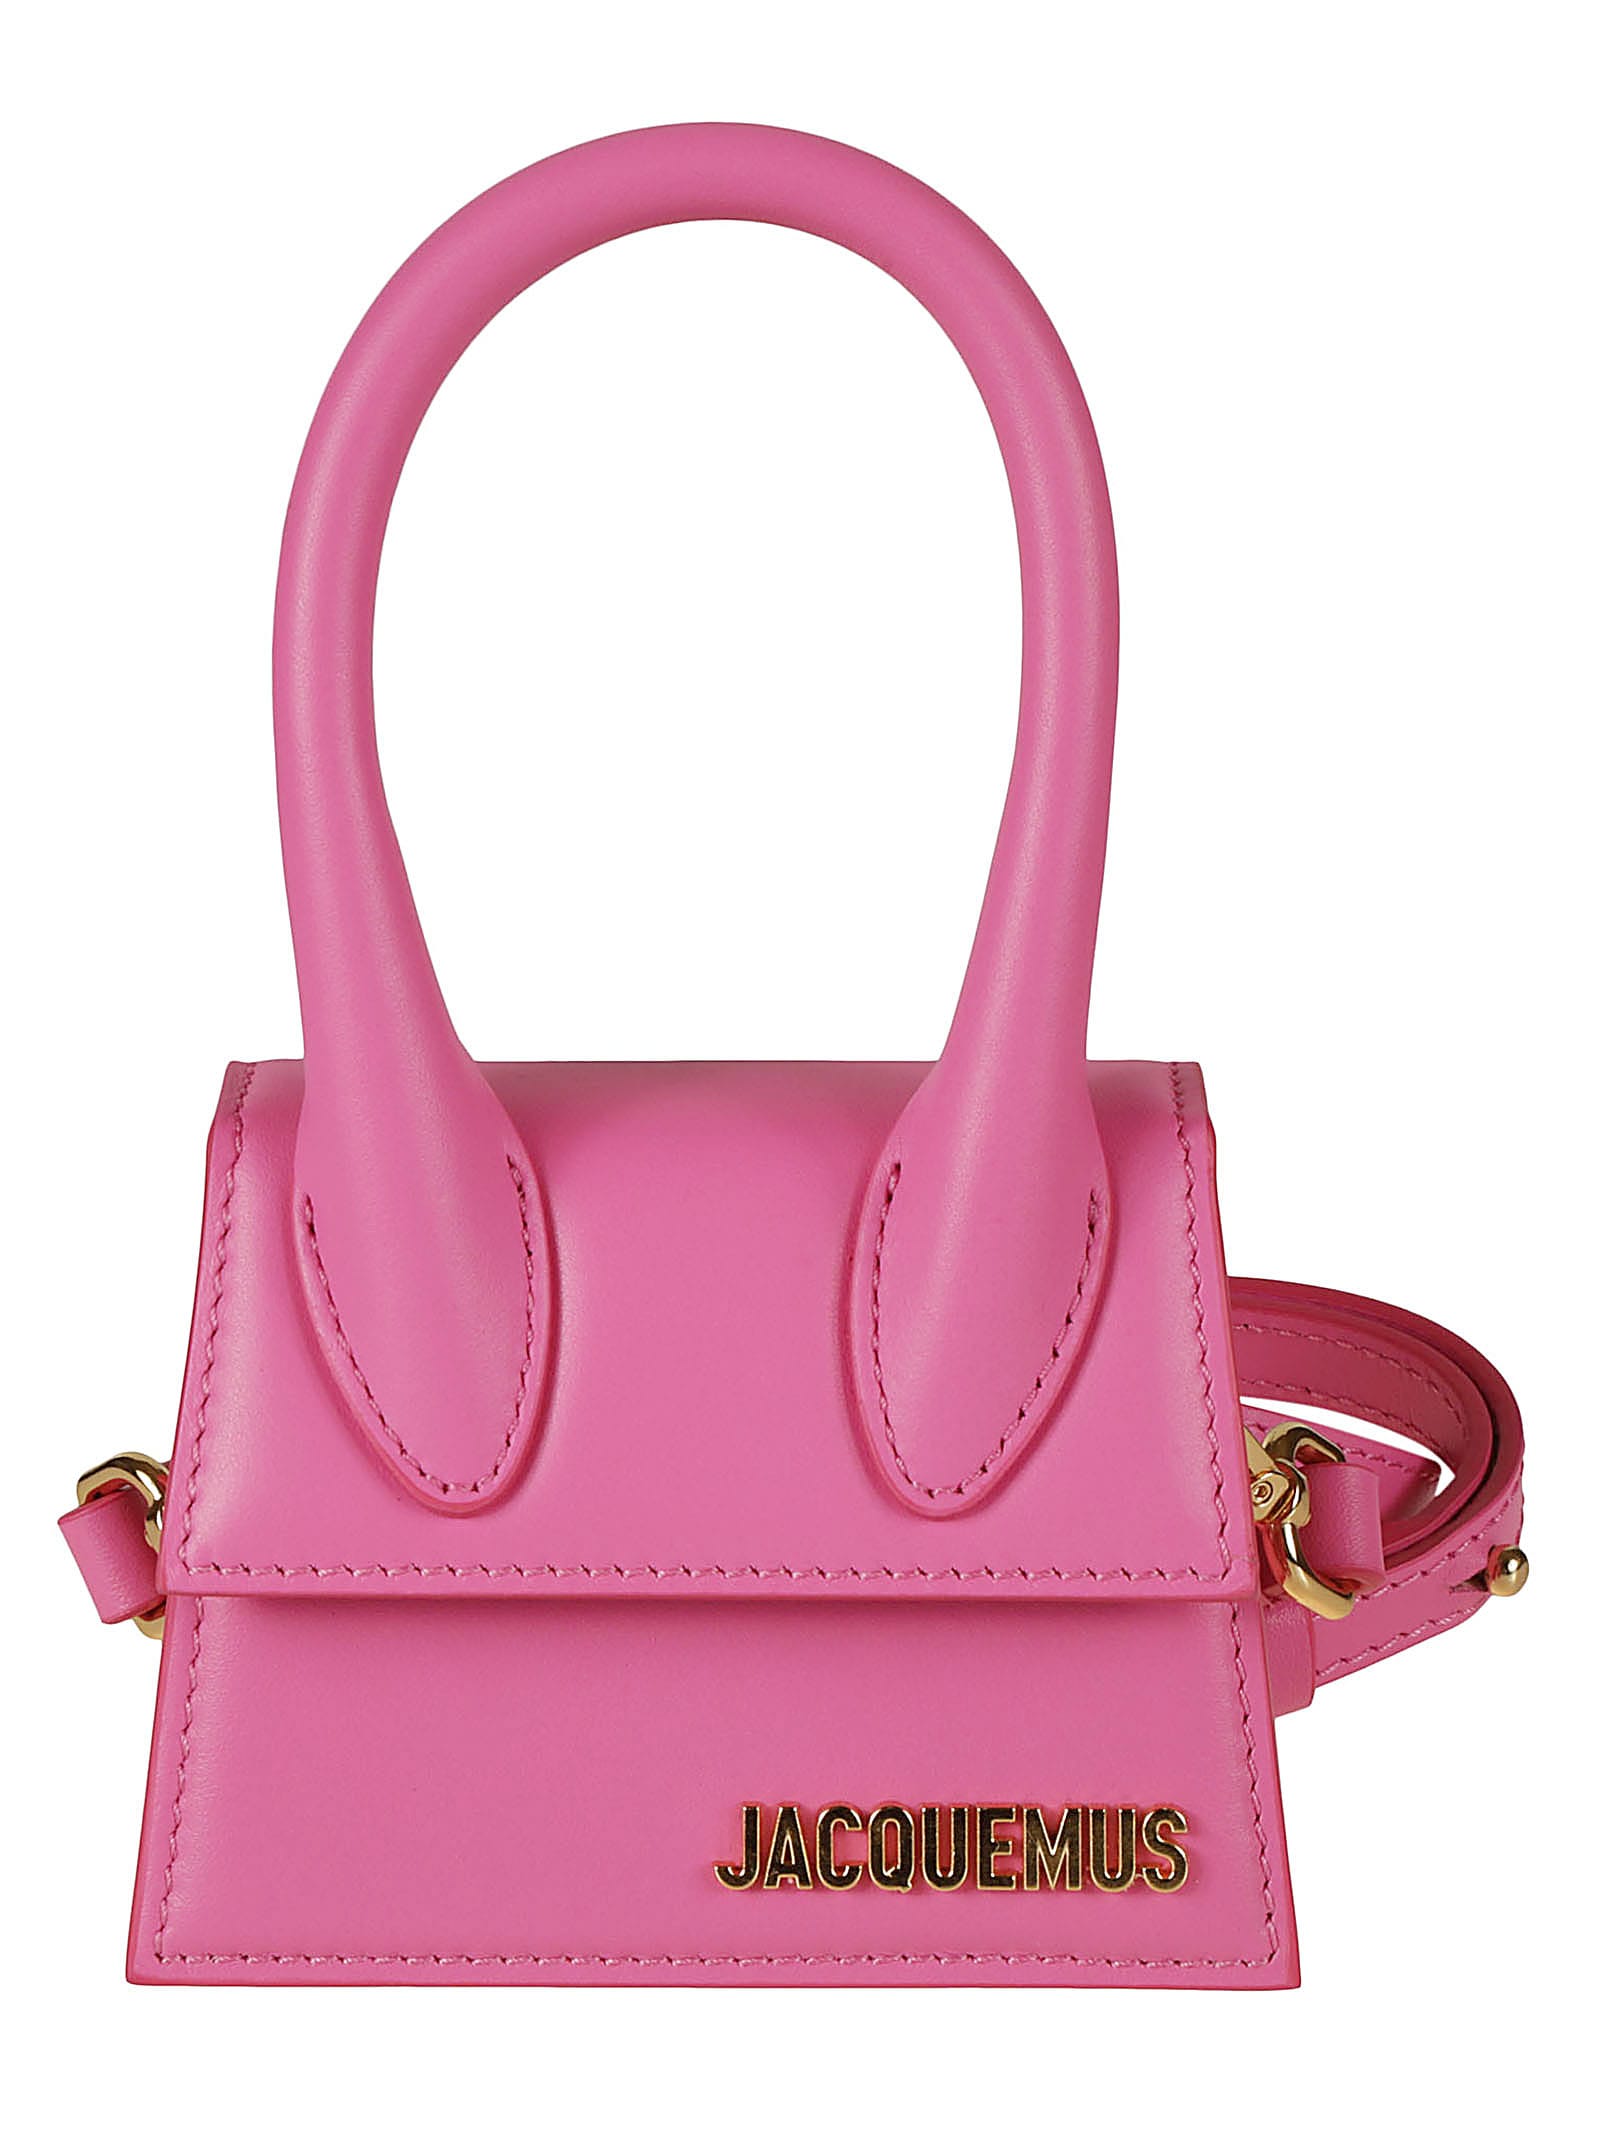 Jacquemus Le Chiquito Shoulder Bag In Pink